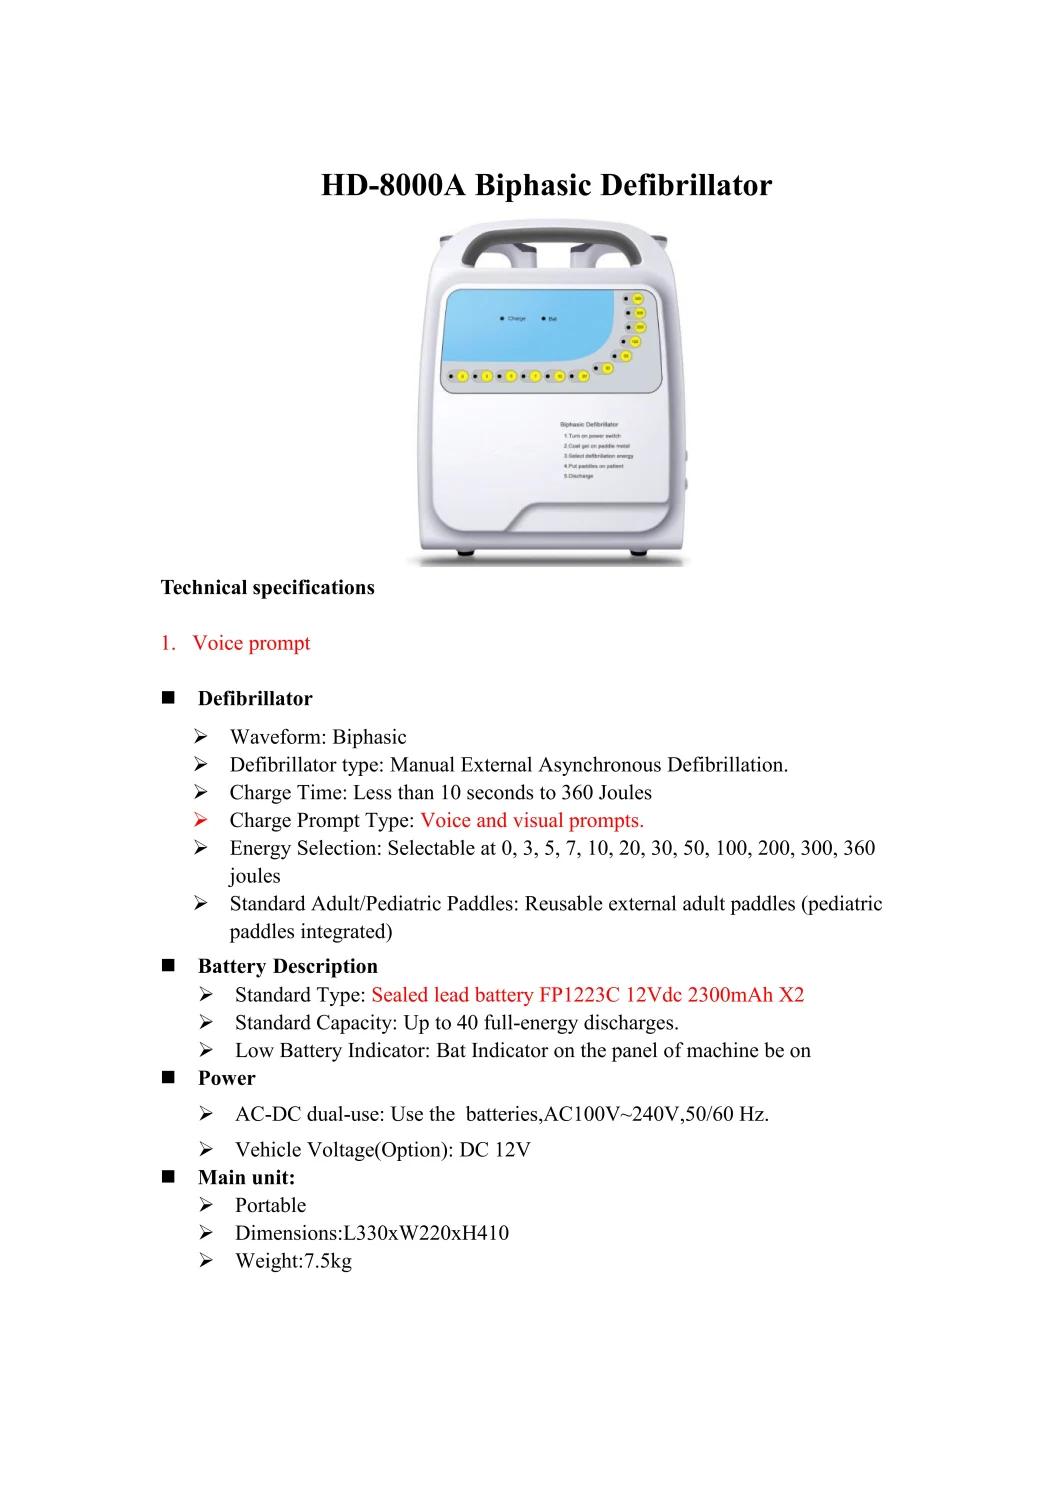 HD-8000A Biphasic Defibrillator Manual External Asynchronous Defibrillation Portable